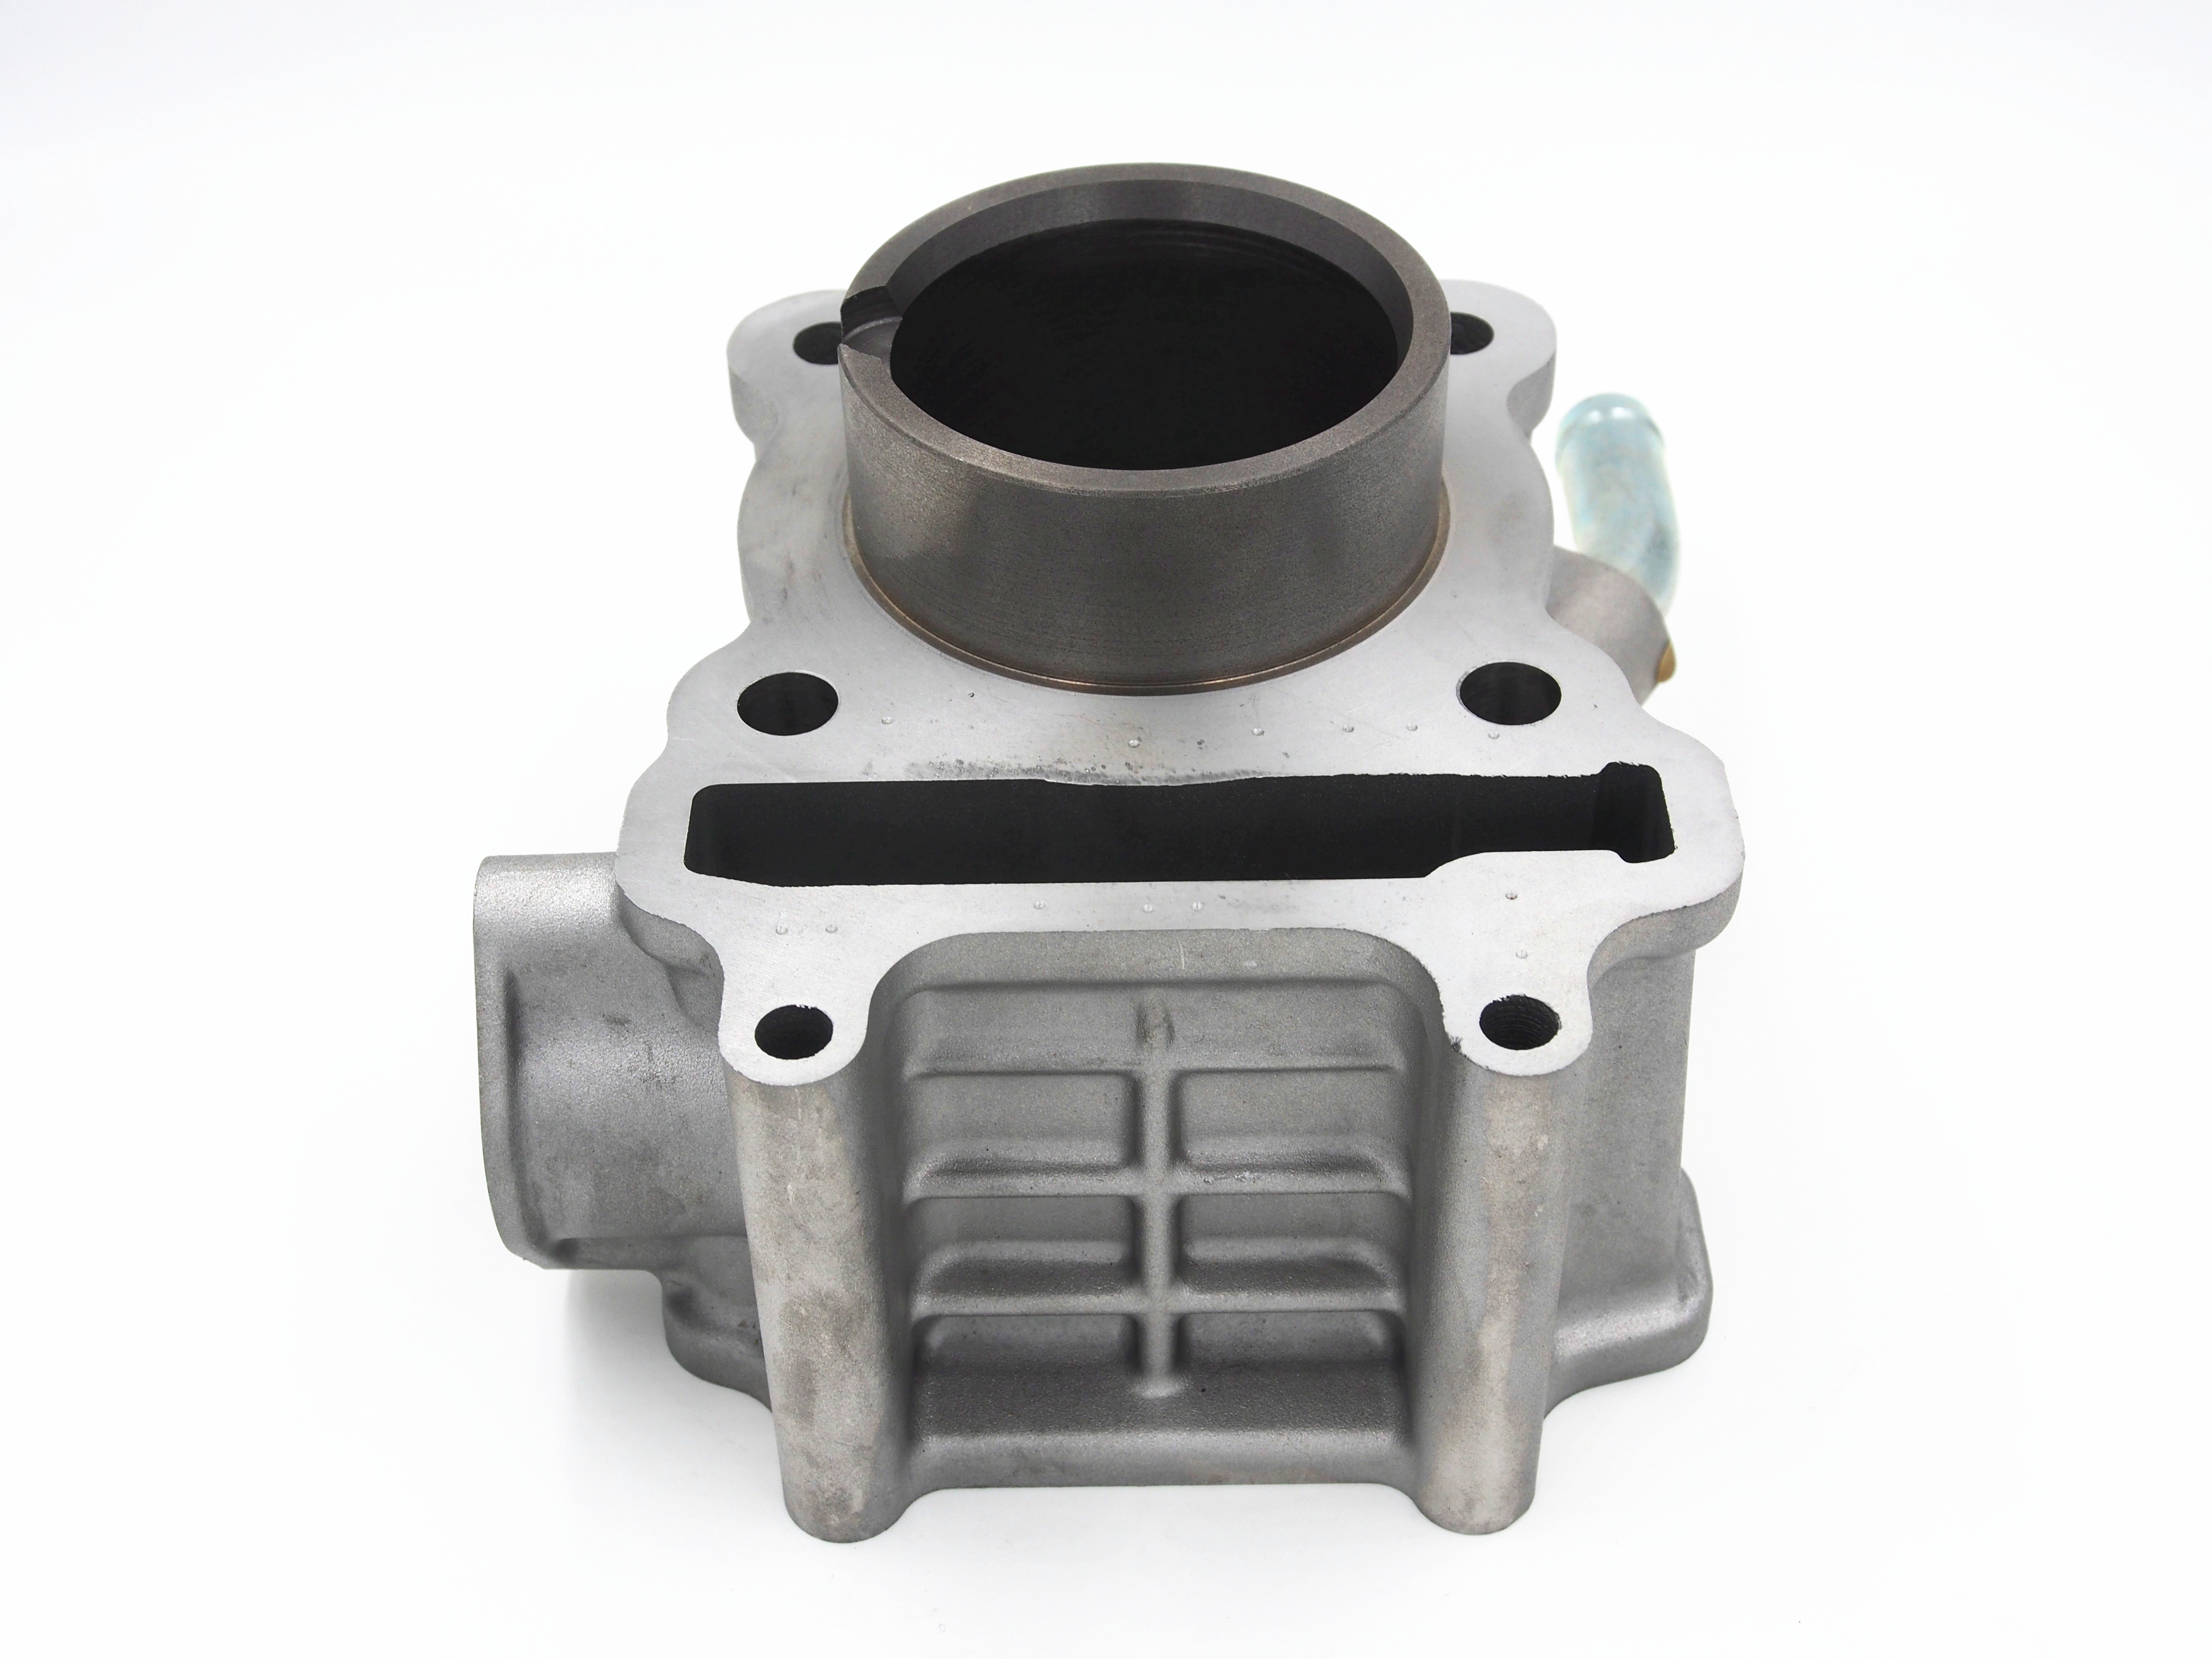 New Developed Aluminum Cylinder Block MA 1 For Sym Motorcycle Engine